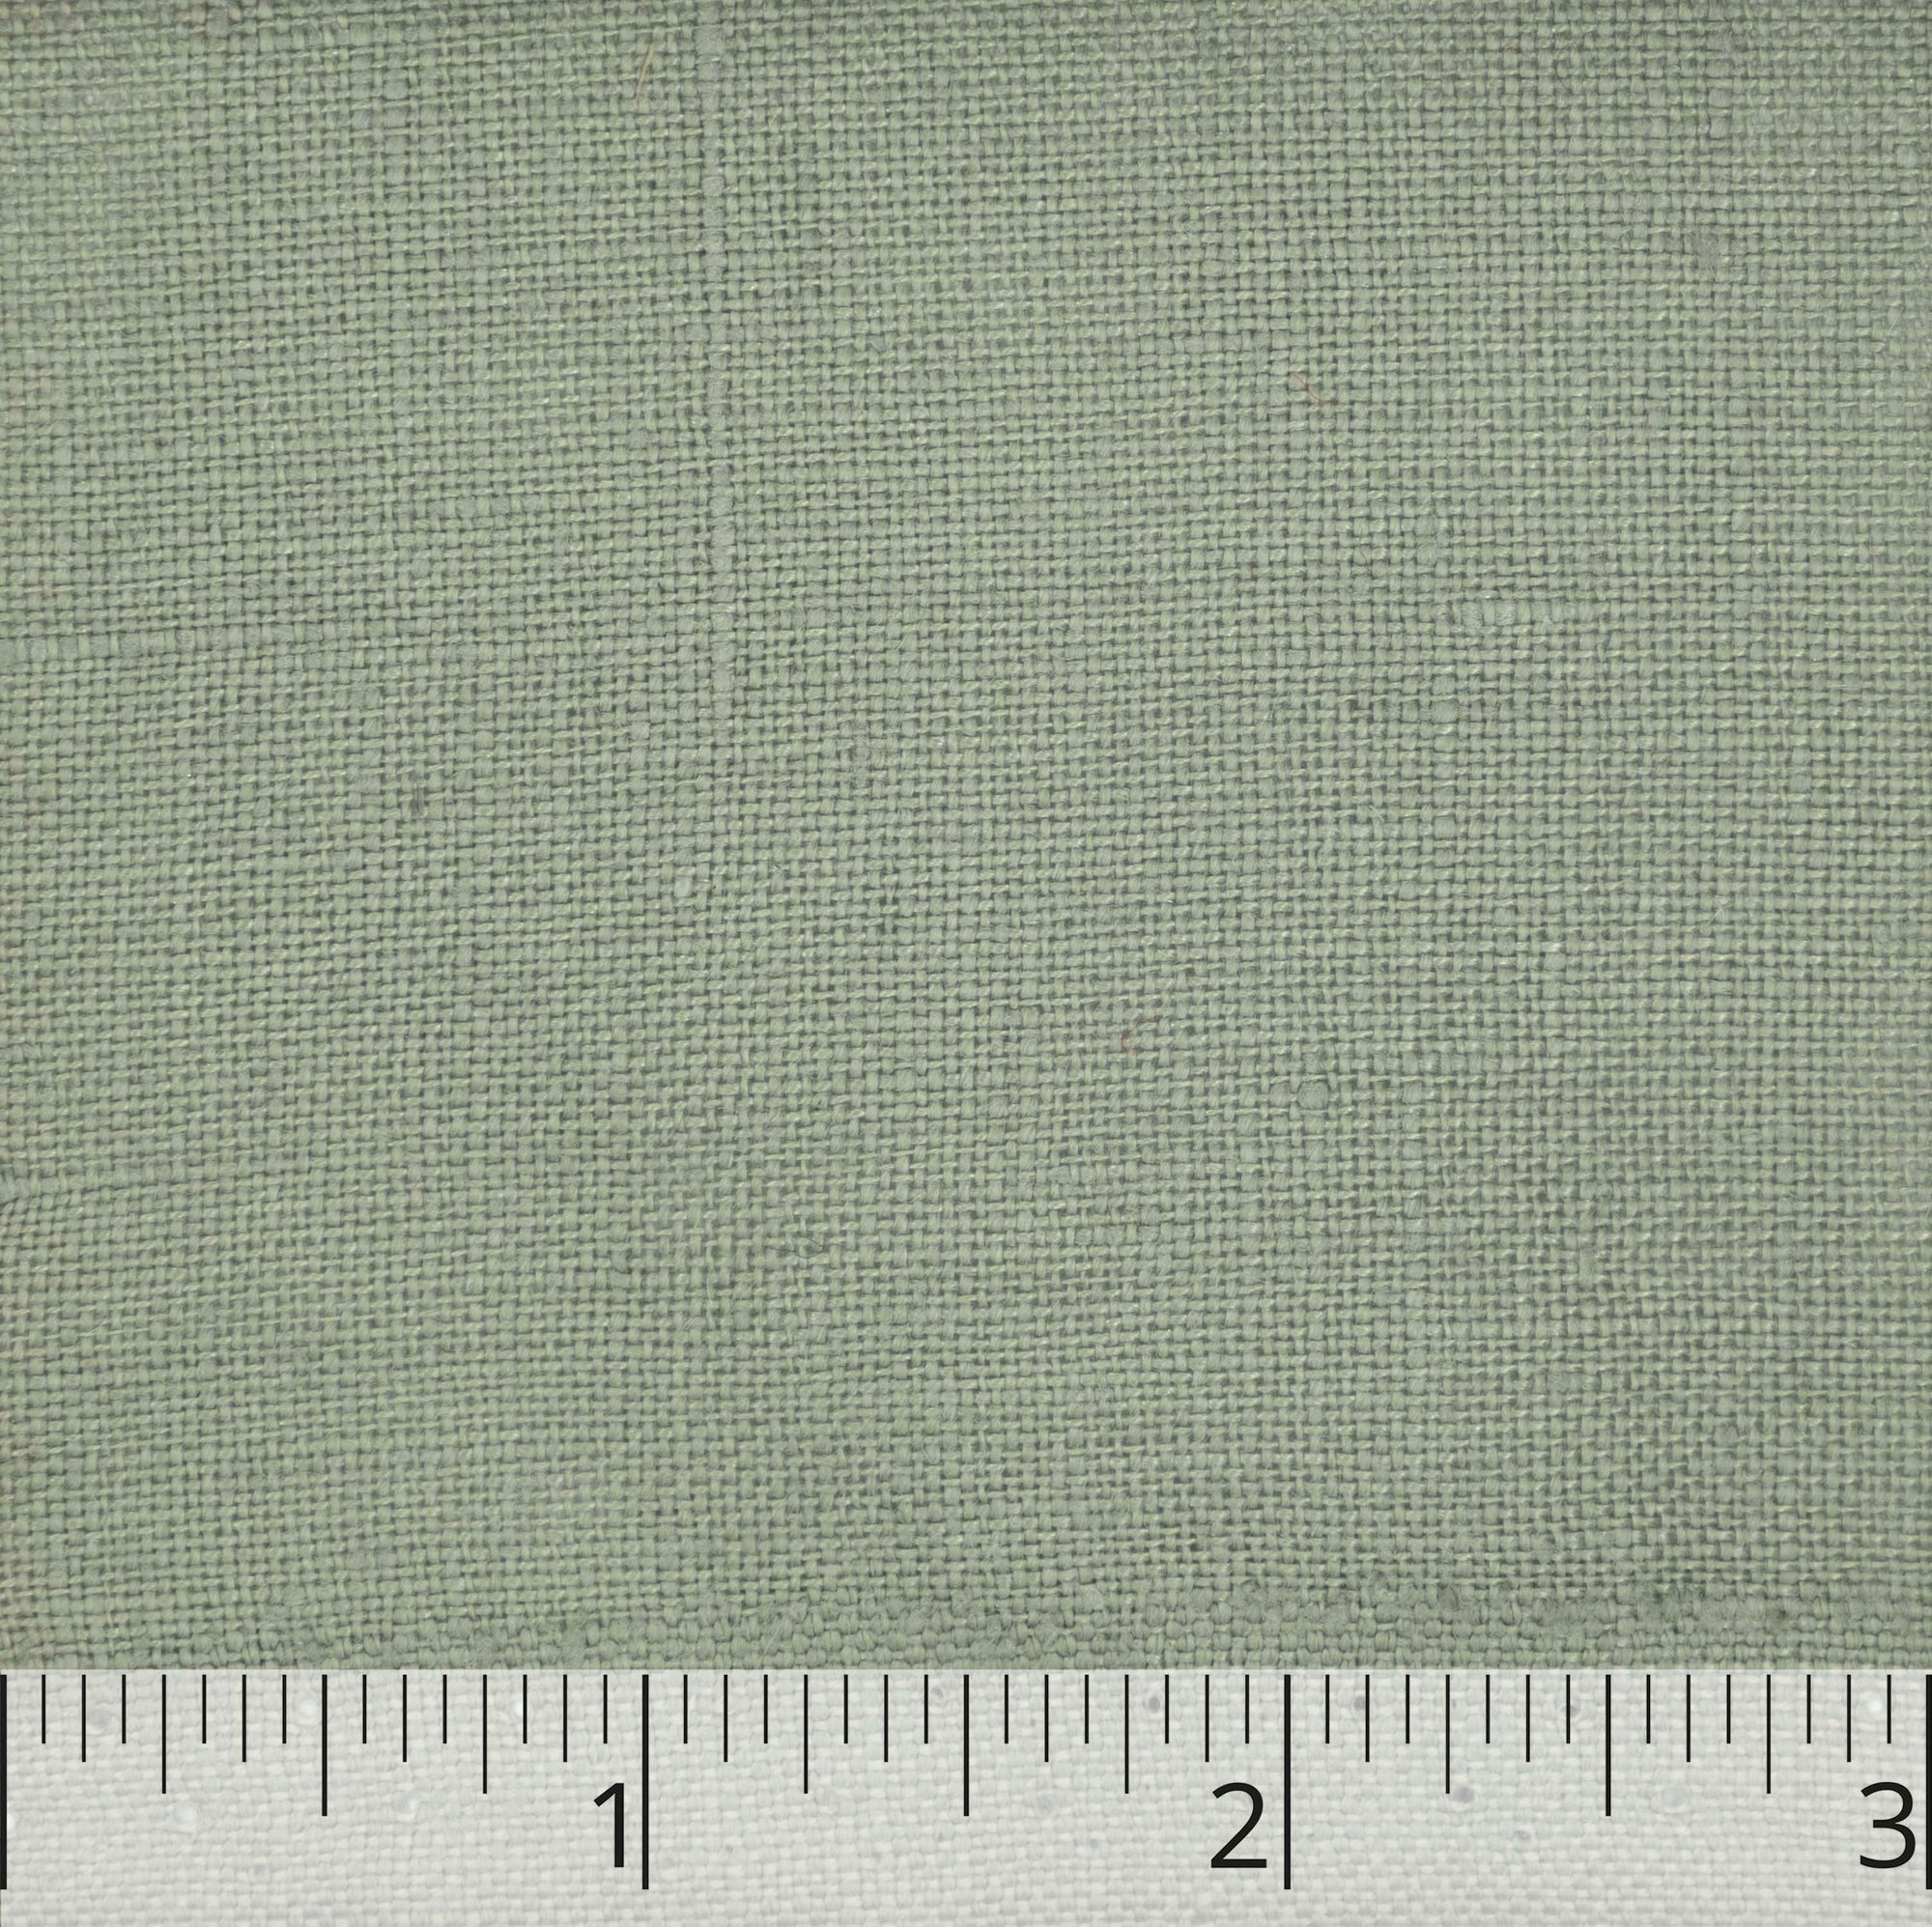 Drab Sage Green Linen - $14.00 yd. - Burnley & Trowbridge Co.